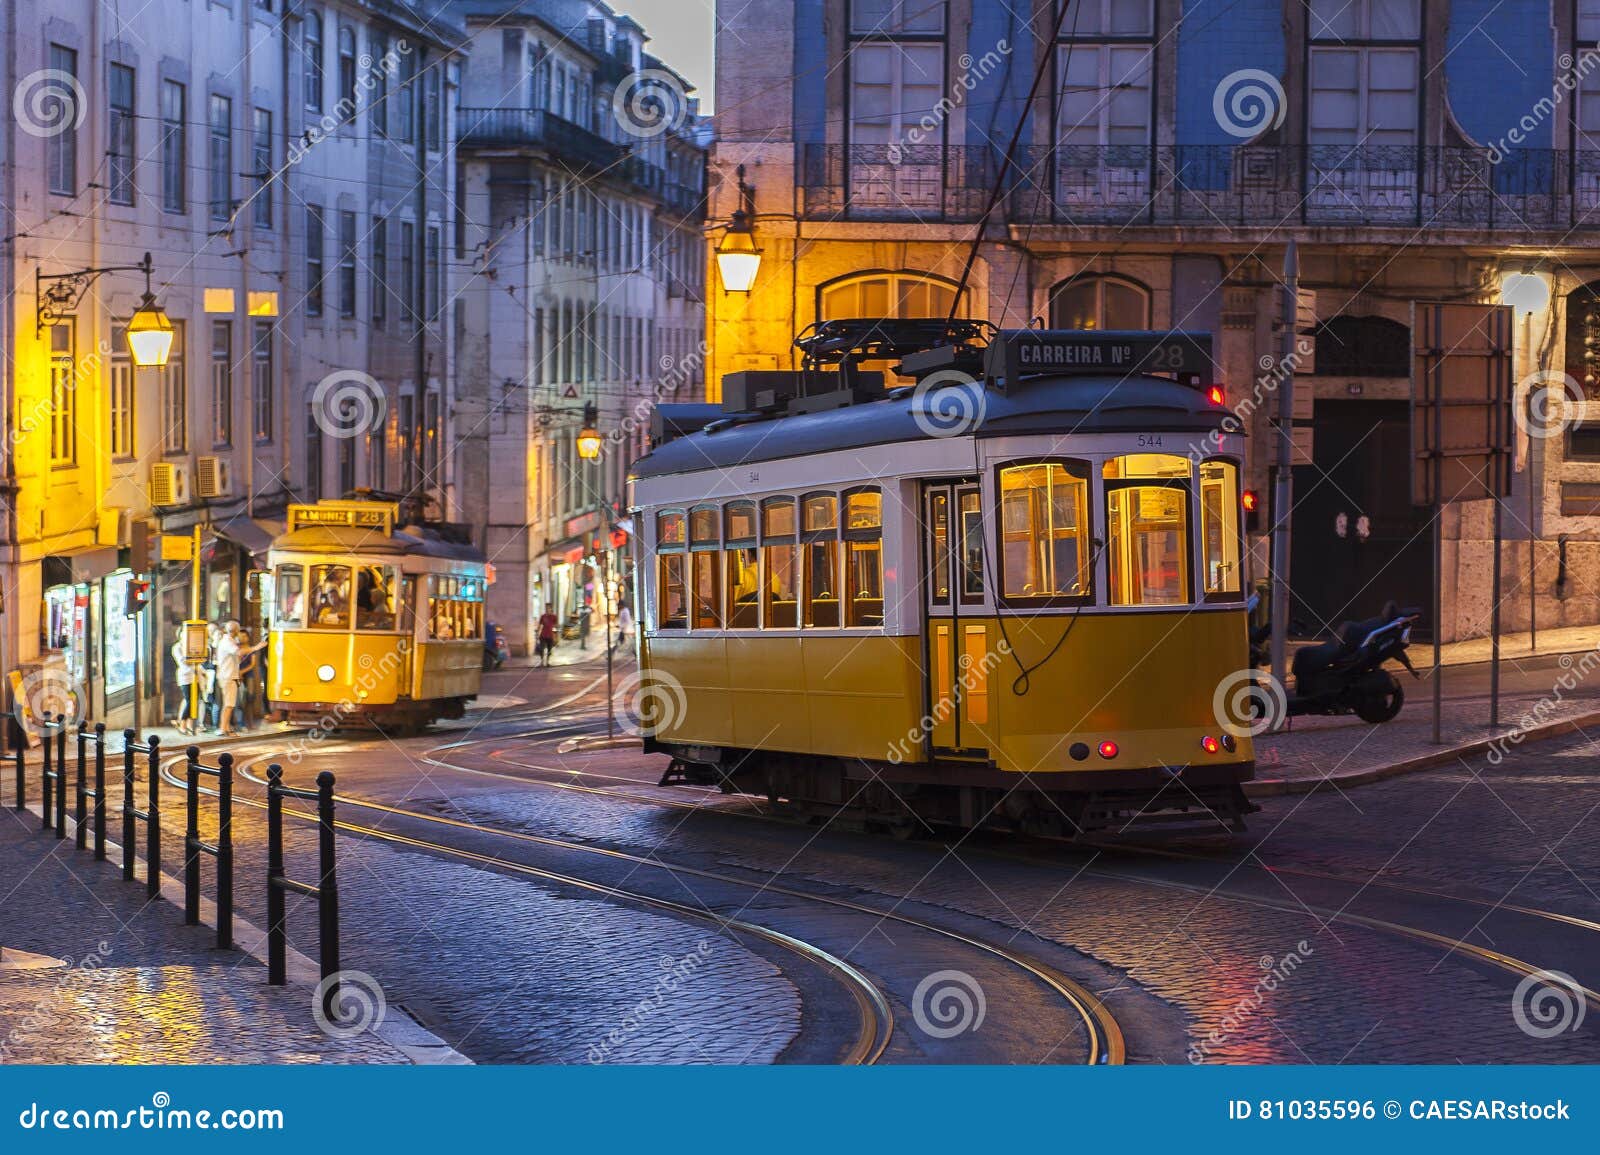 tram car on street at evening in lisbon, portugal